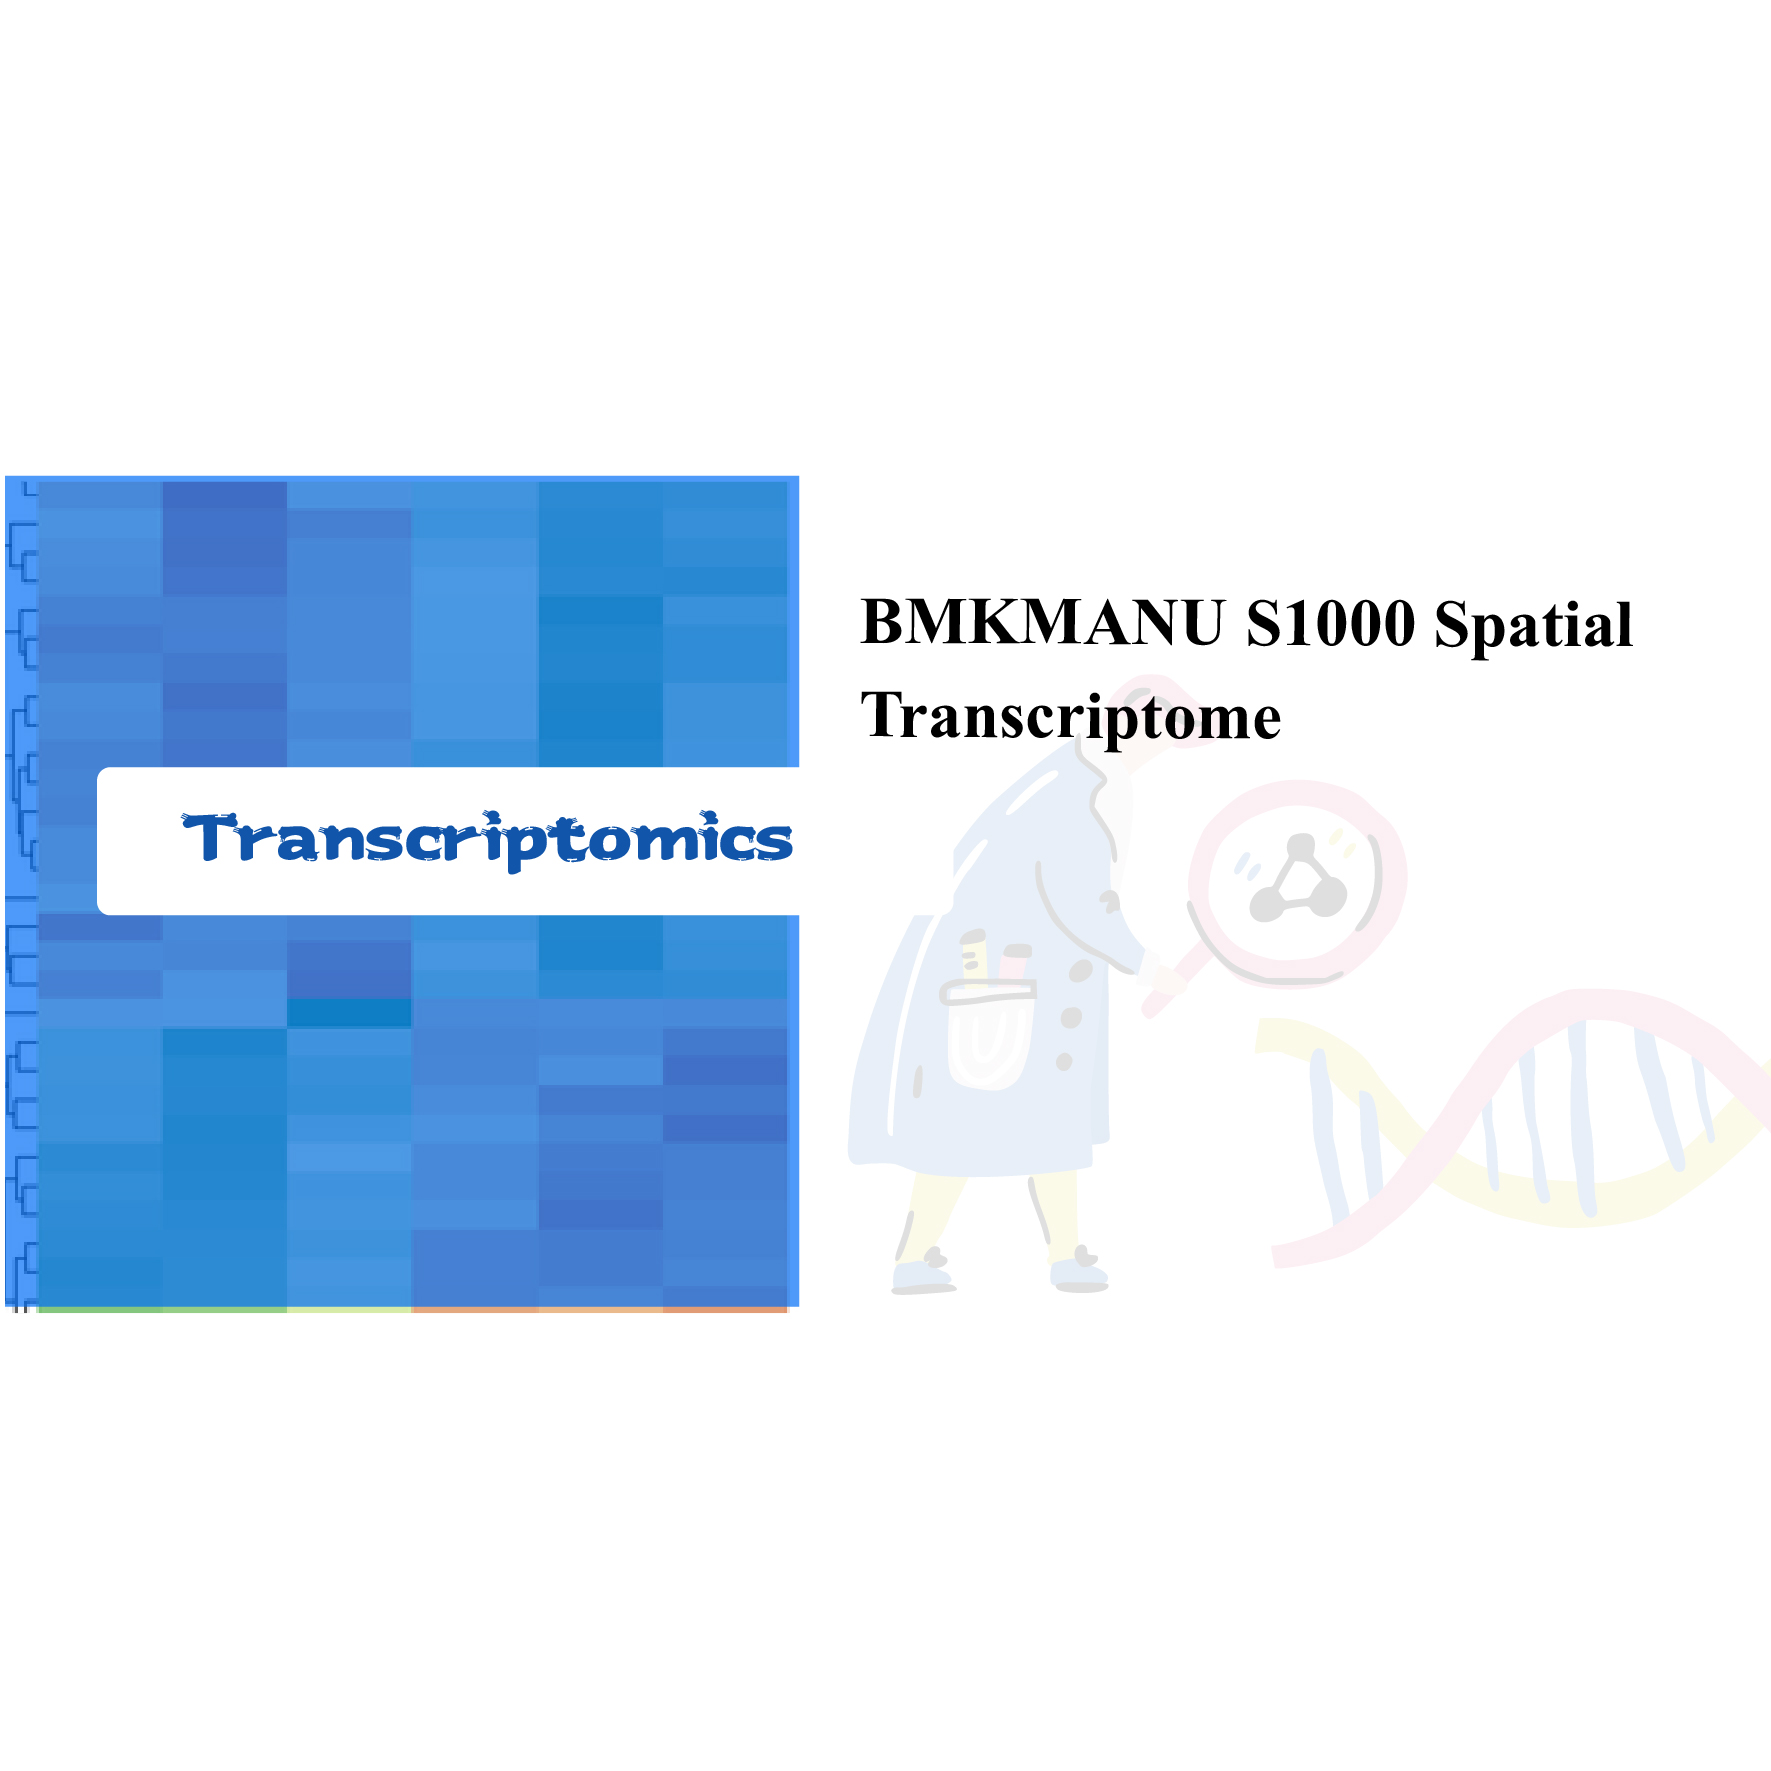 BMKMANU S1000 Spatial Transcriptome